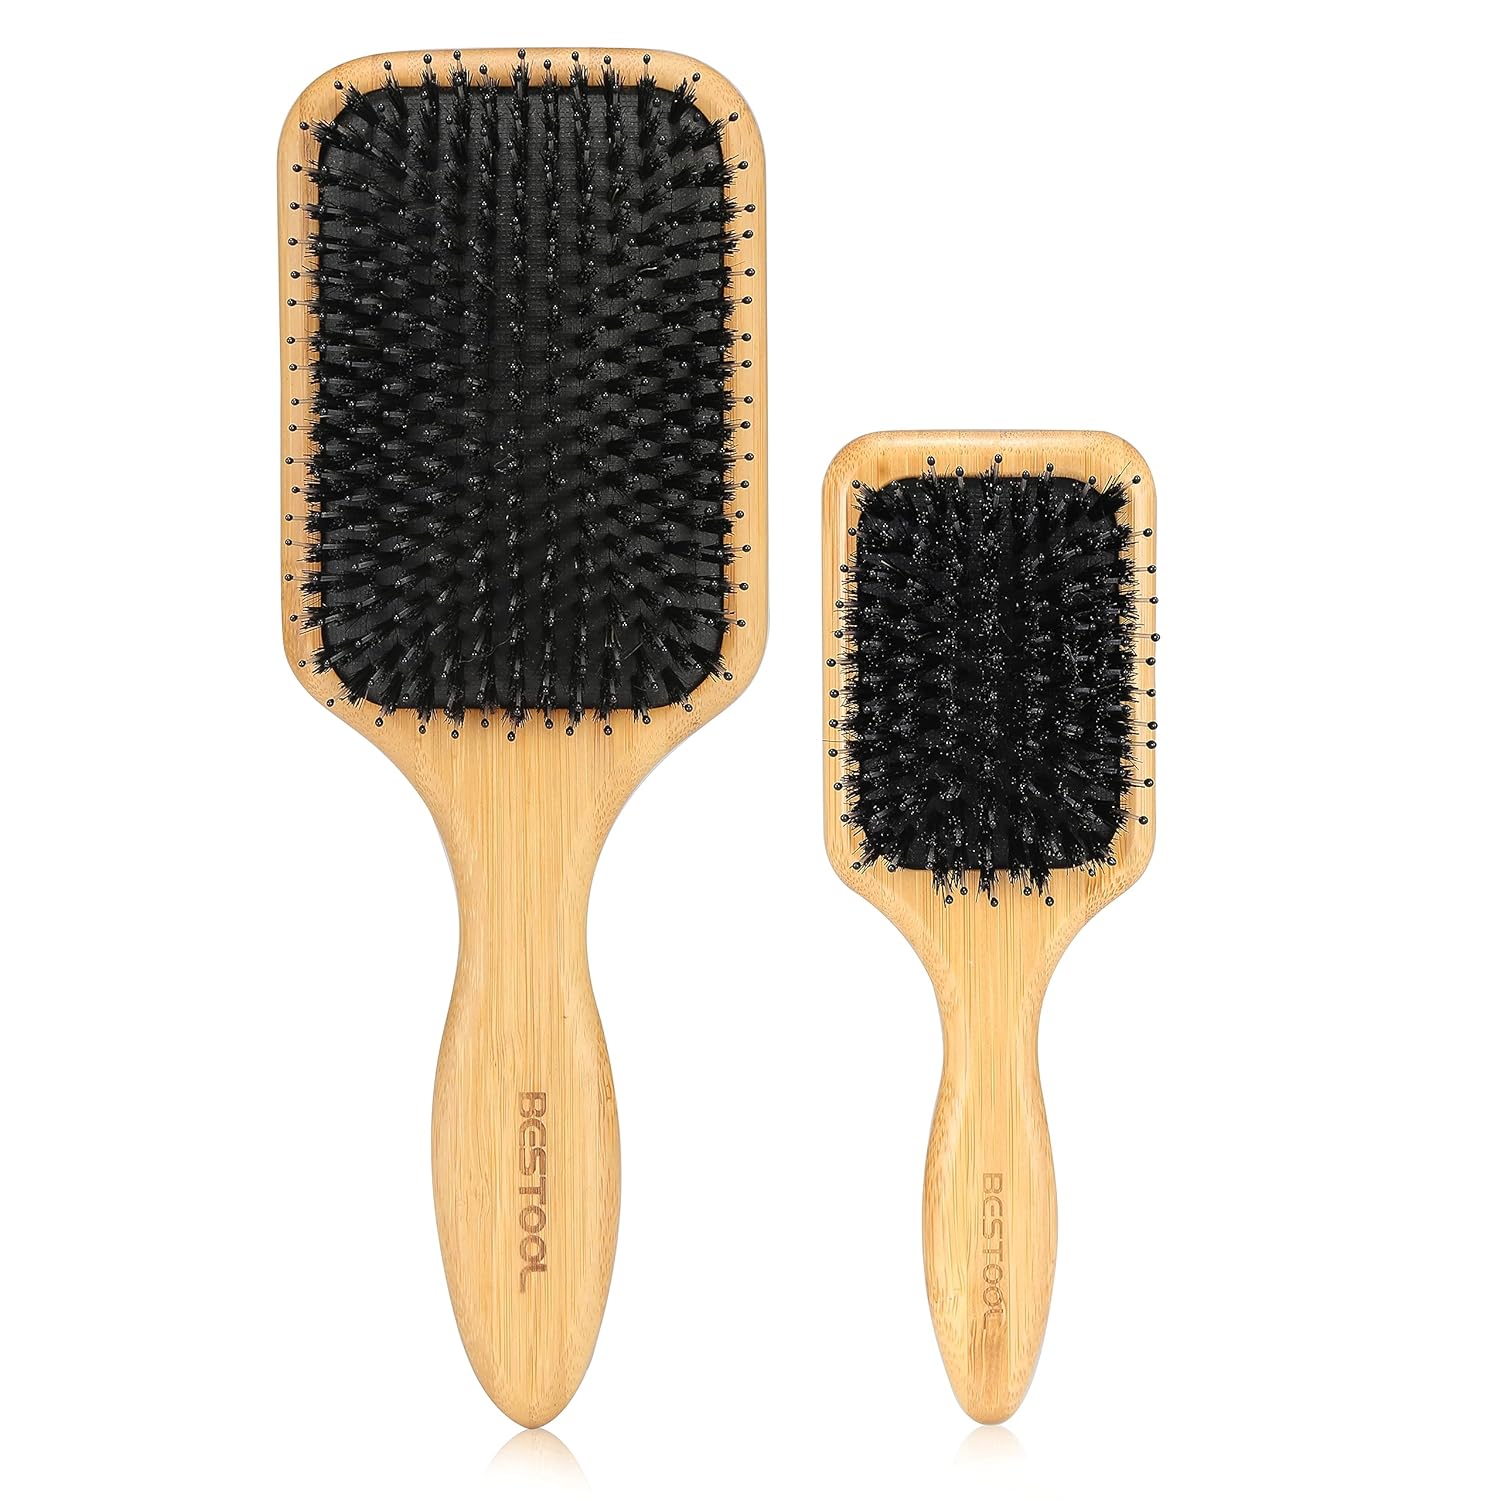 BESTOOL 100% Boar Bristle Hair Brush